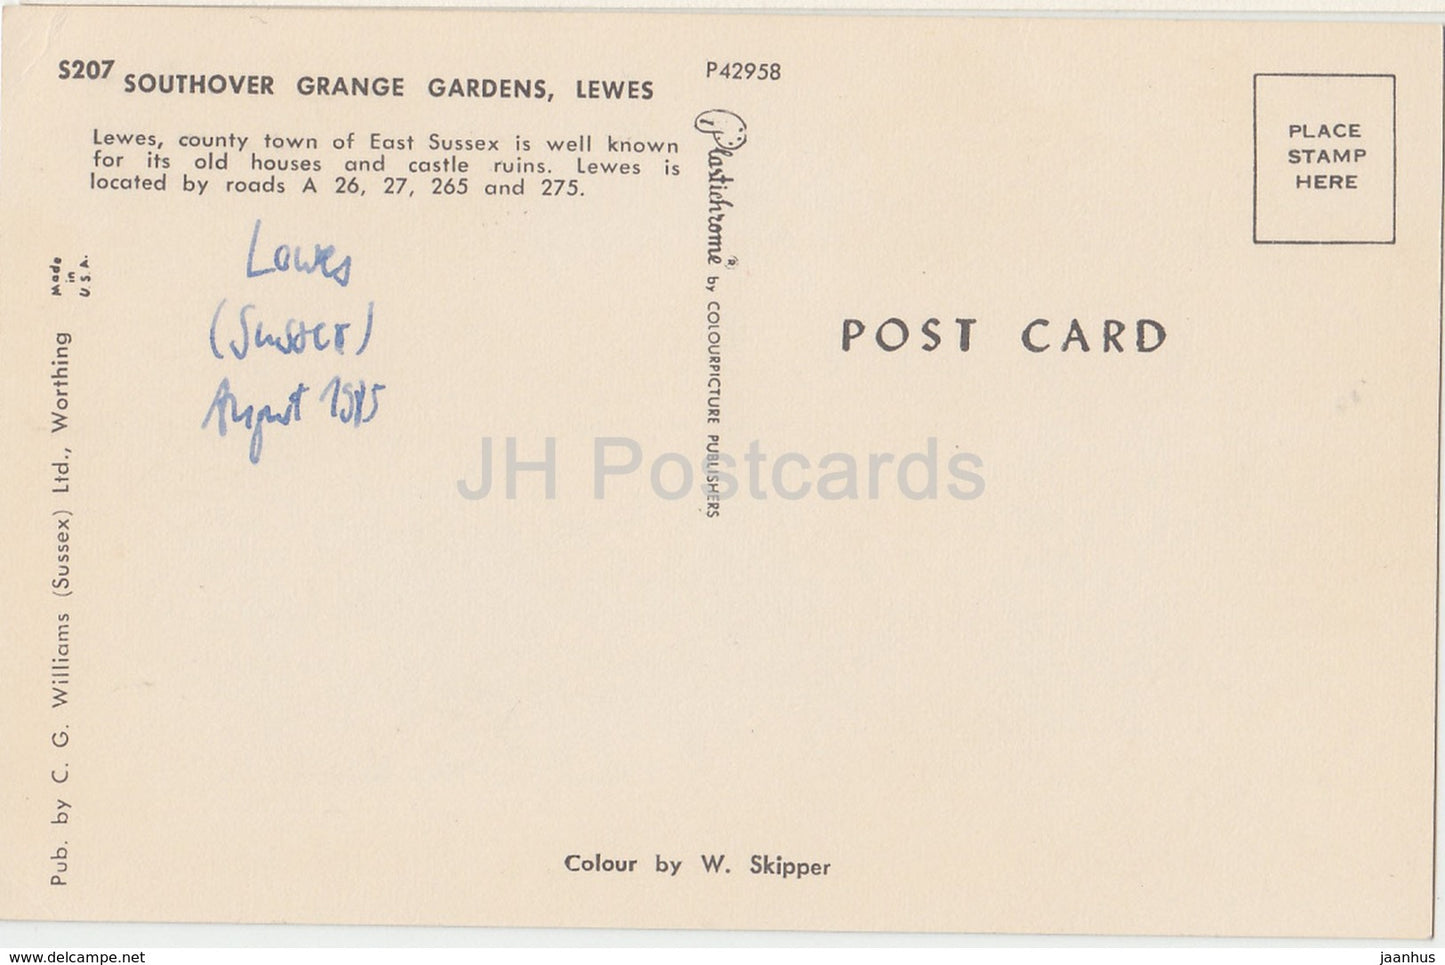 Lewes - Southover Grange Gardens - P42958 - 1985 - United Kingdom - England - used